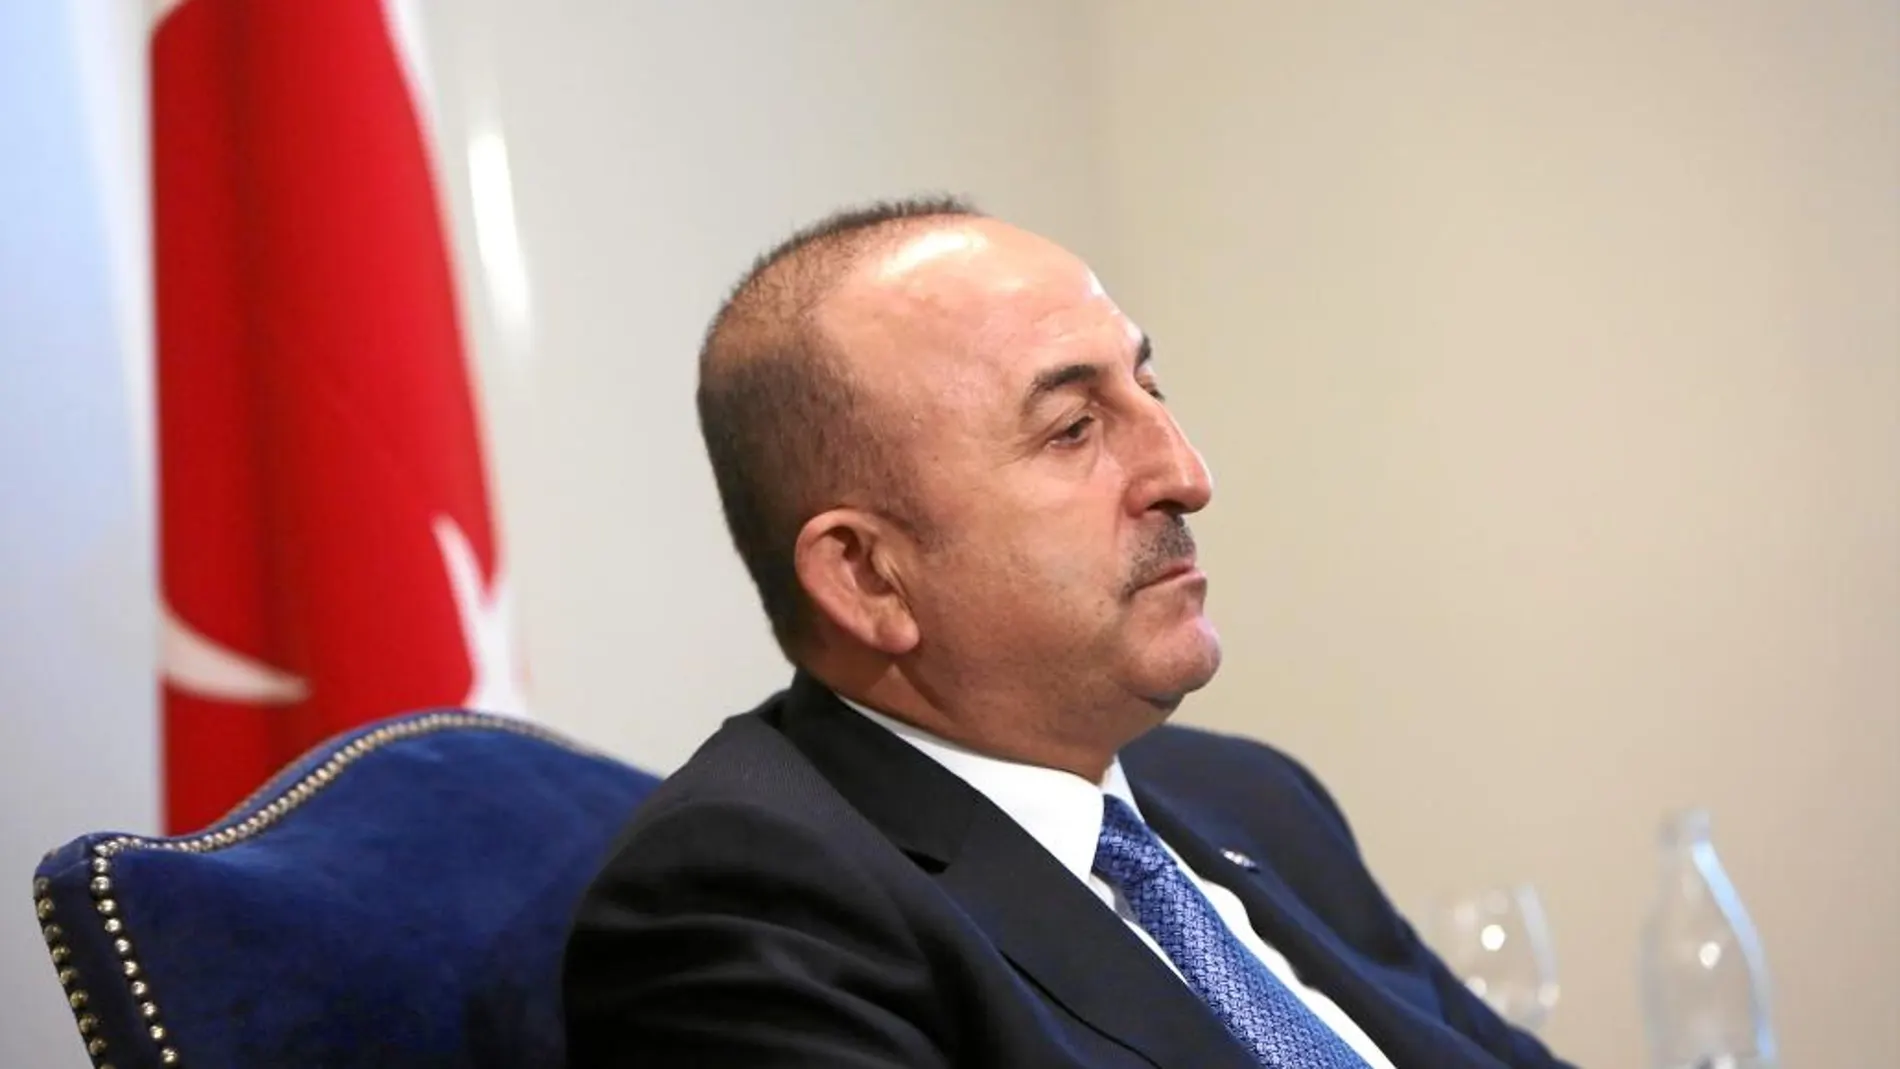 Mevlut Çavusoglu / Ministro de Exteriores de Turquía